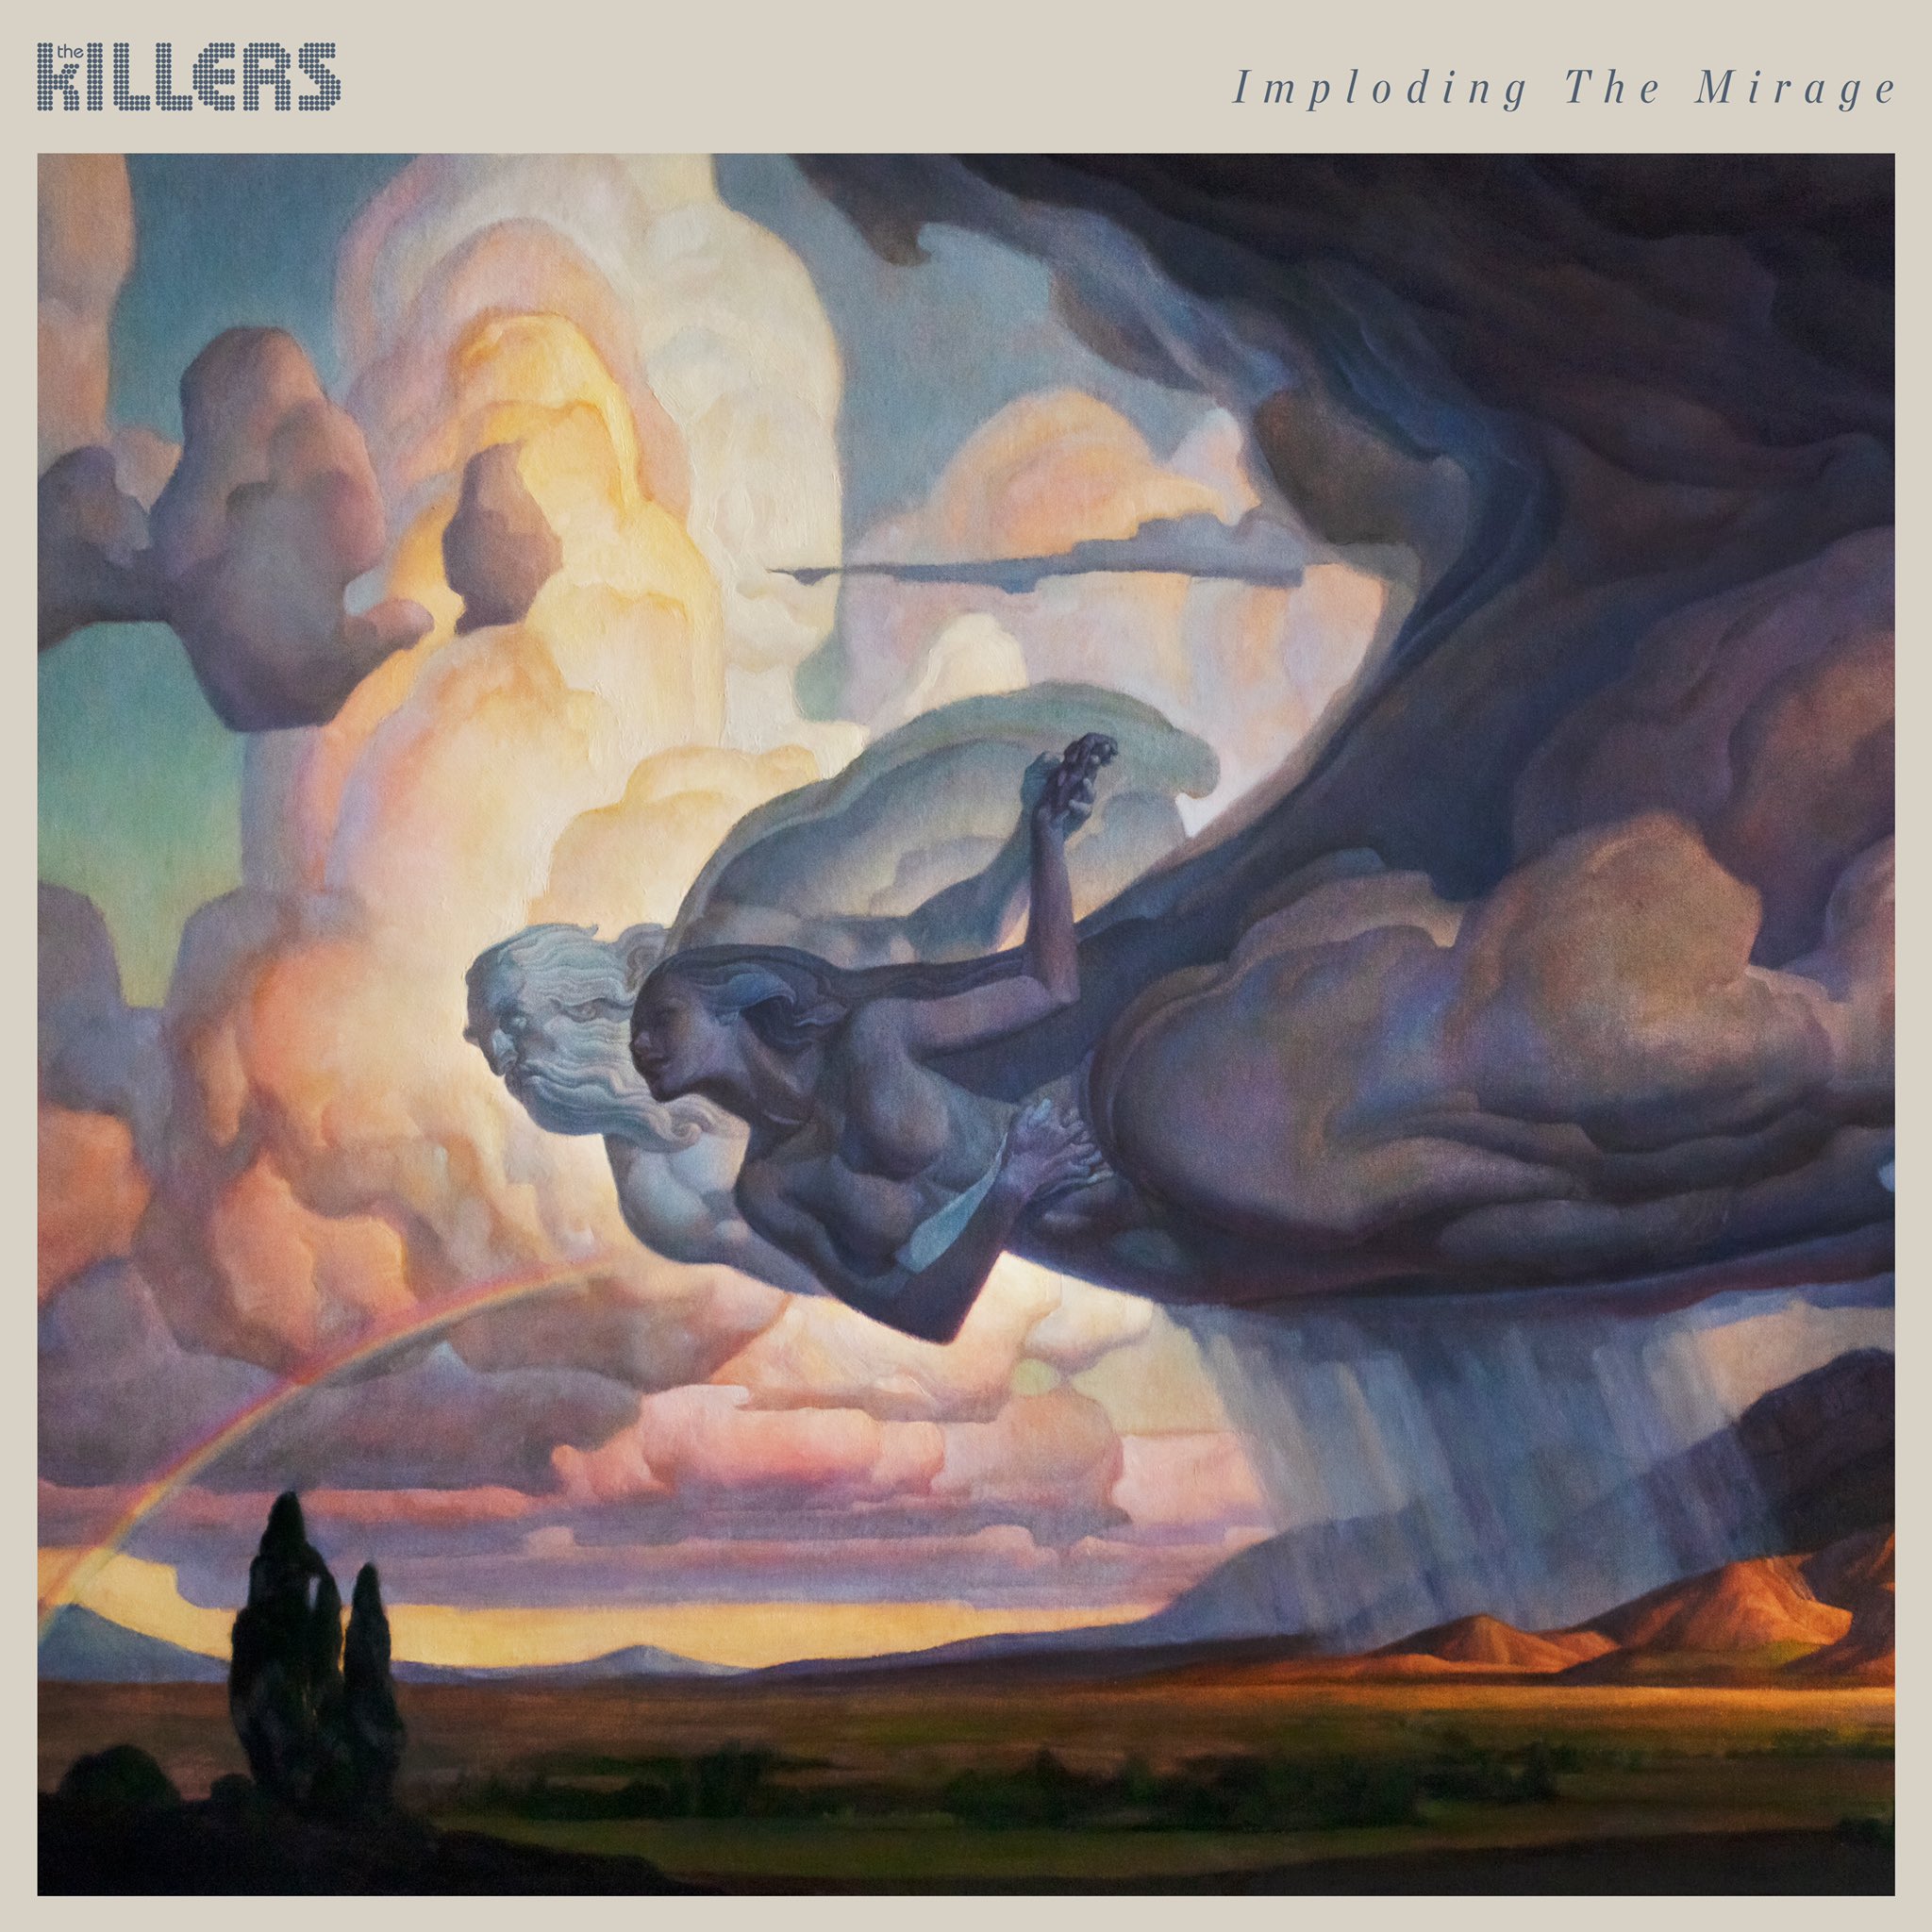 ¡'The Killers' está de vuelta! Lanzan Imploding The Mirate